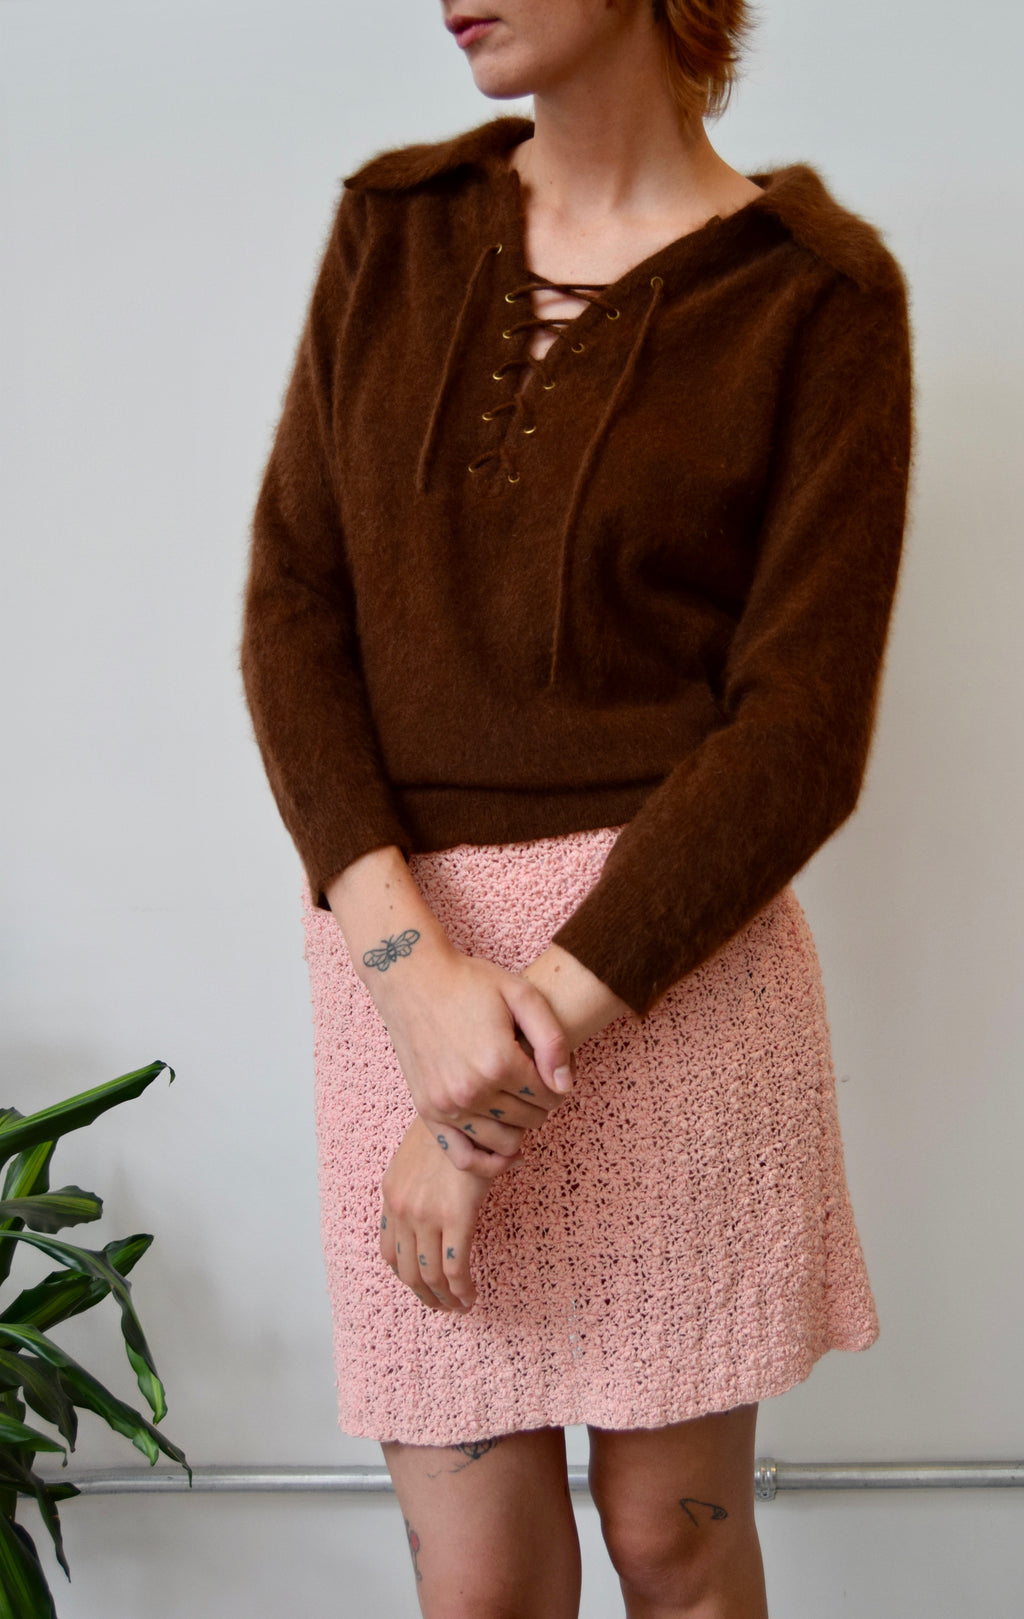 Vintage Parkhurst Angora Sweater